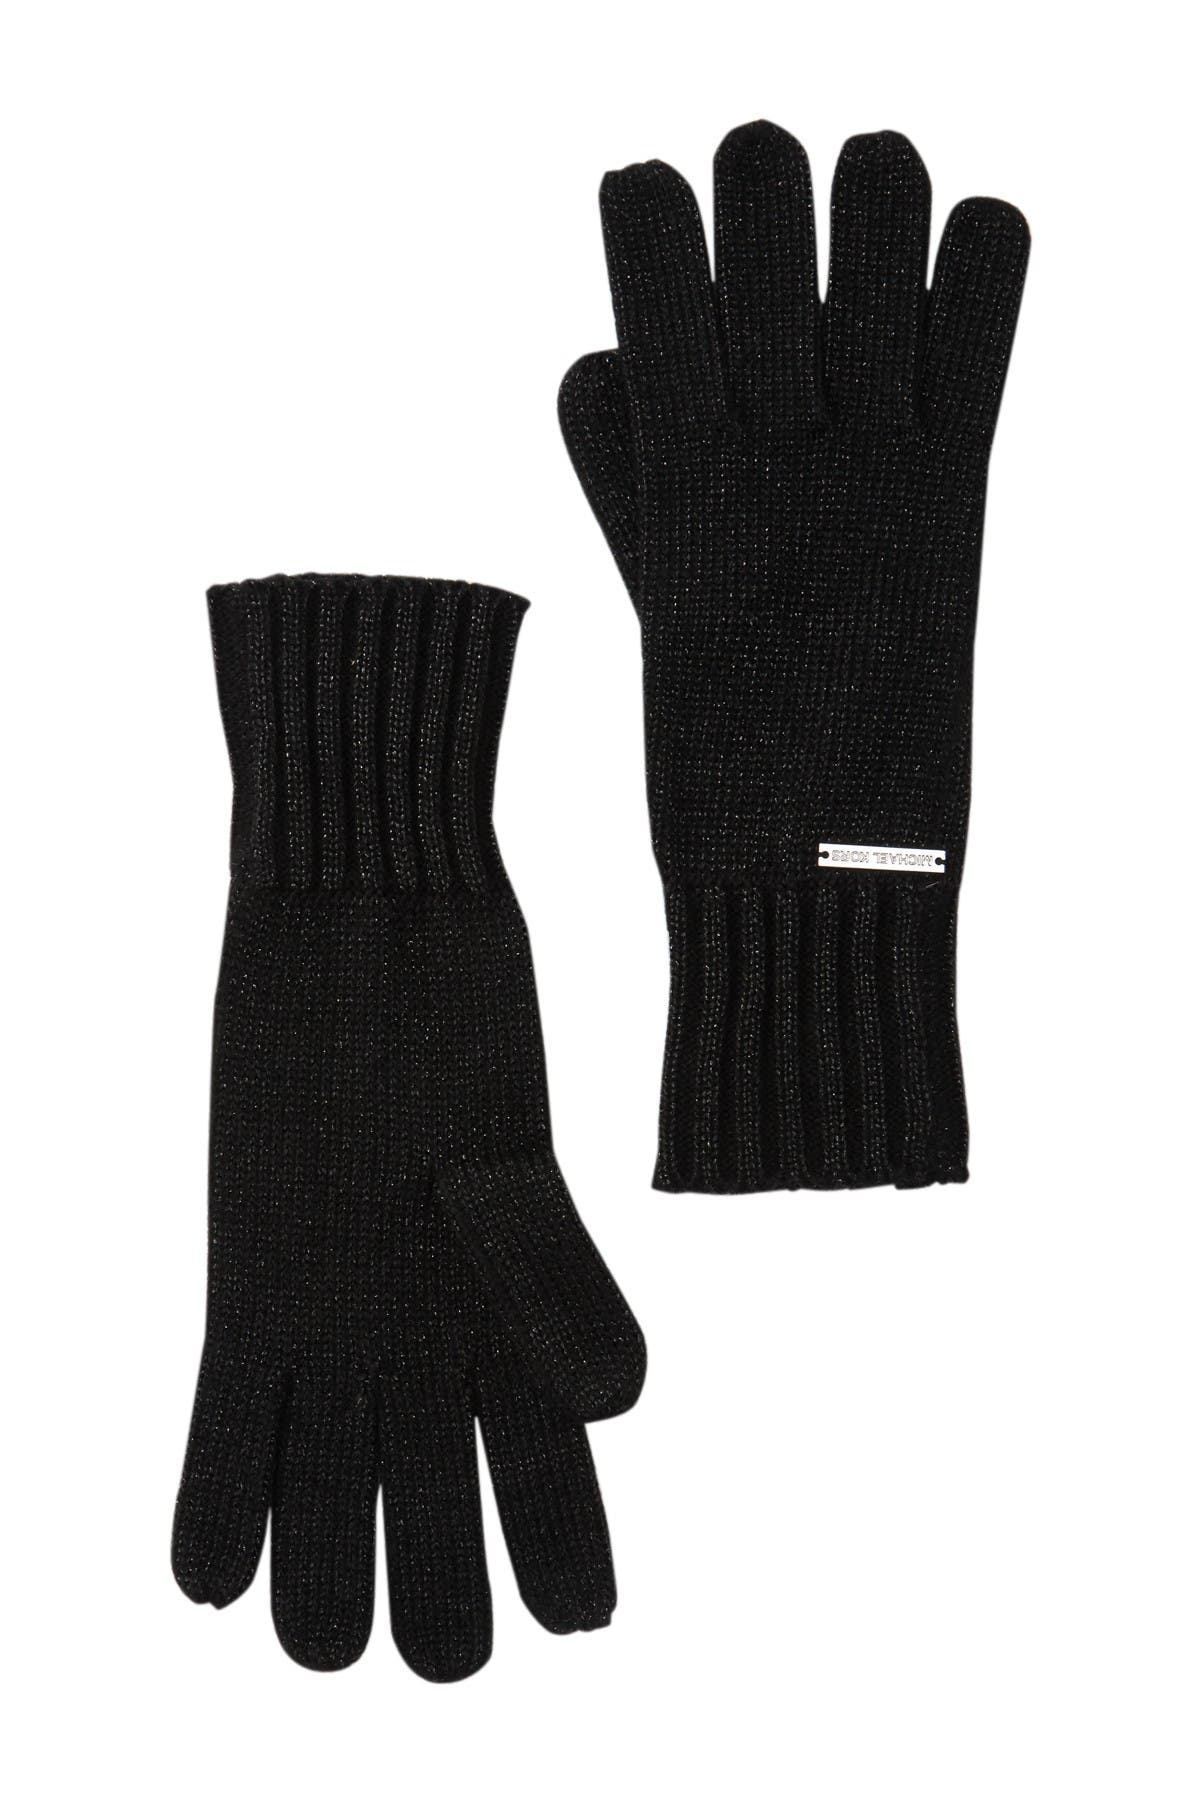 Michael Kors | Colorblock Gloves 